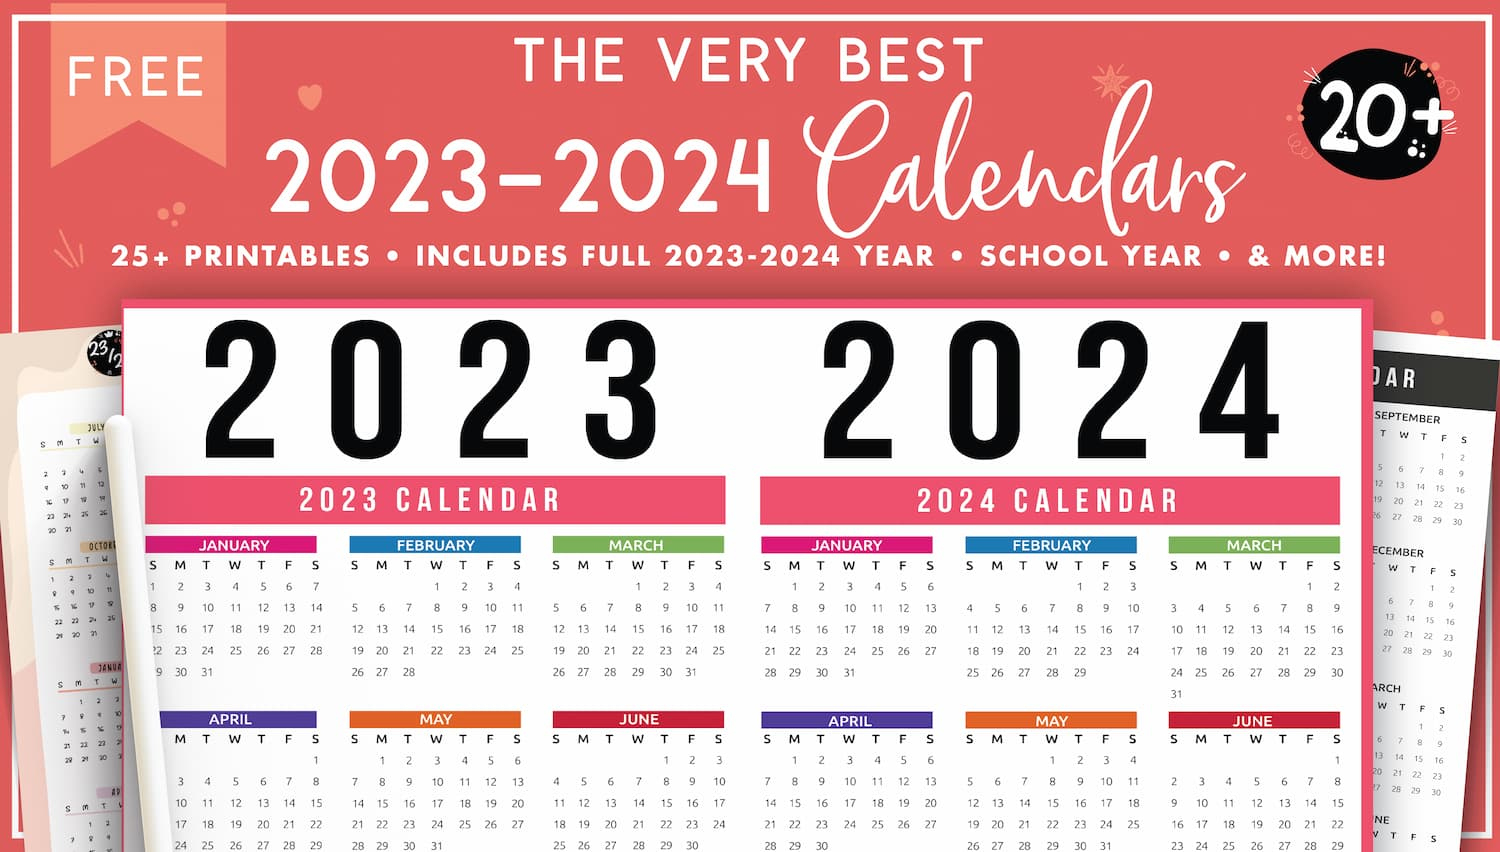 2023 2024 Calendar Free Printables - World Of Printables | Free Printable Calendar 2023 2024 Editable